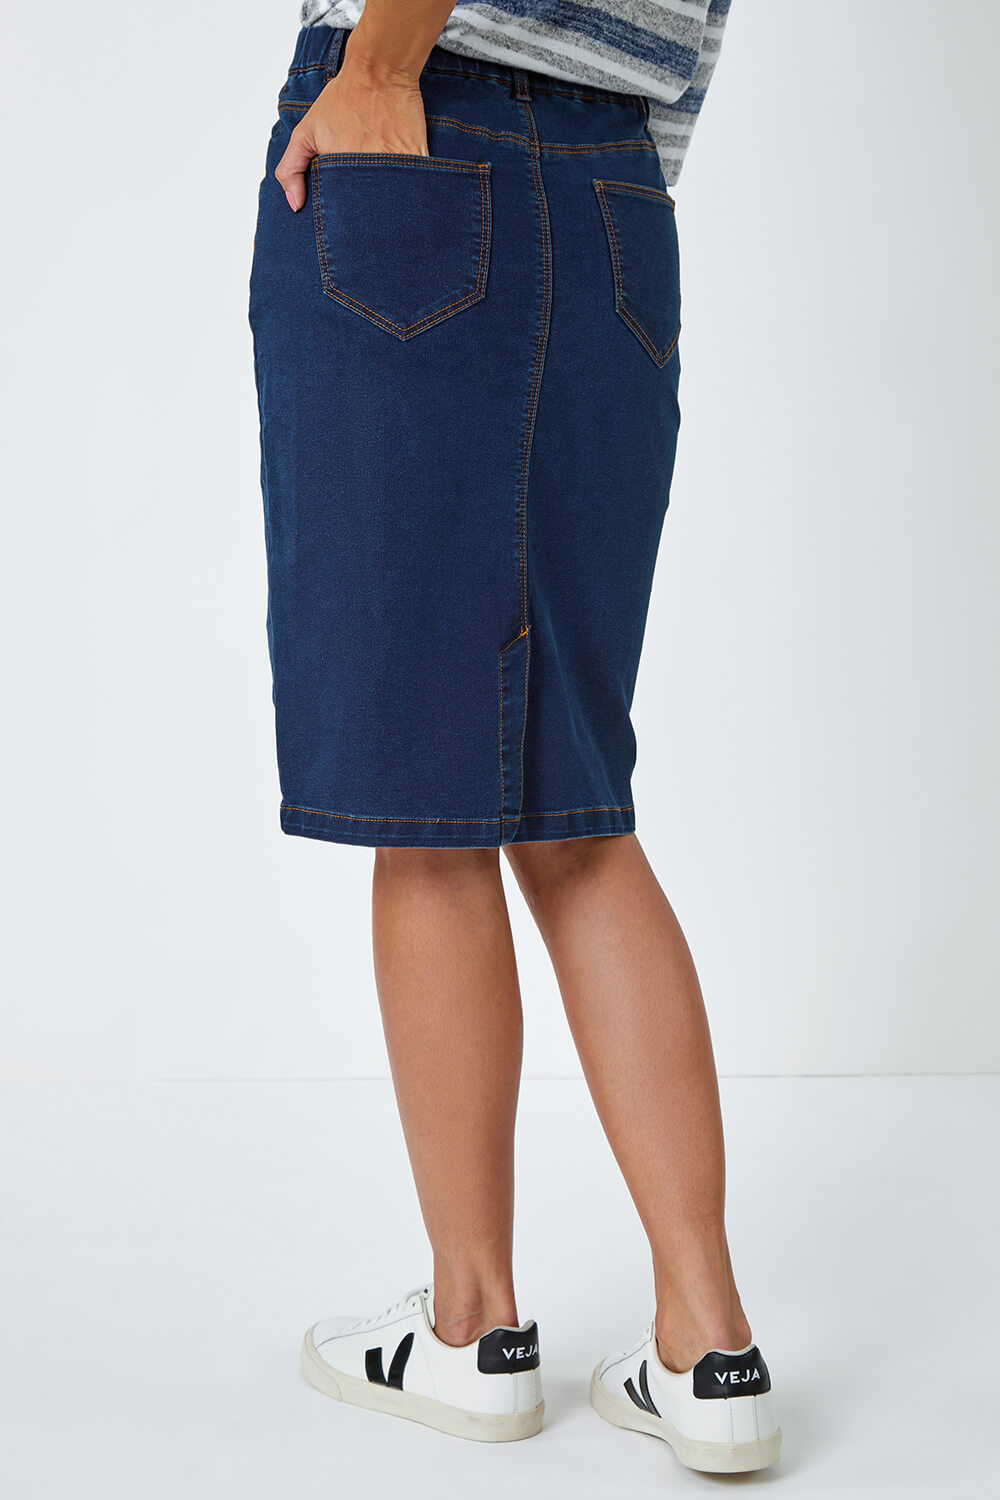 Indigo Cotton Denim Stretch Skirt, Image 3 of 5